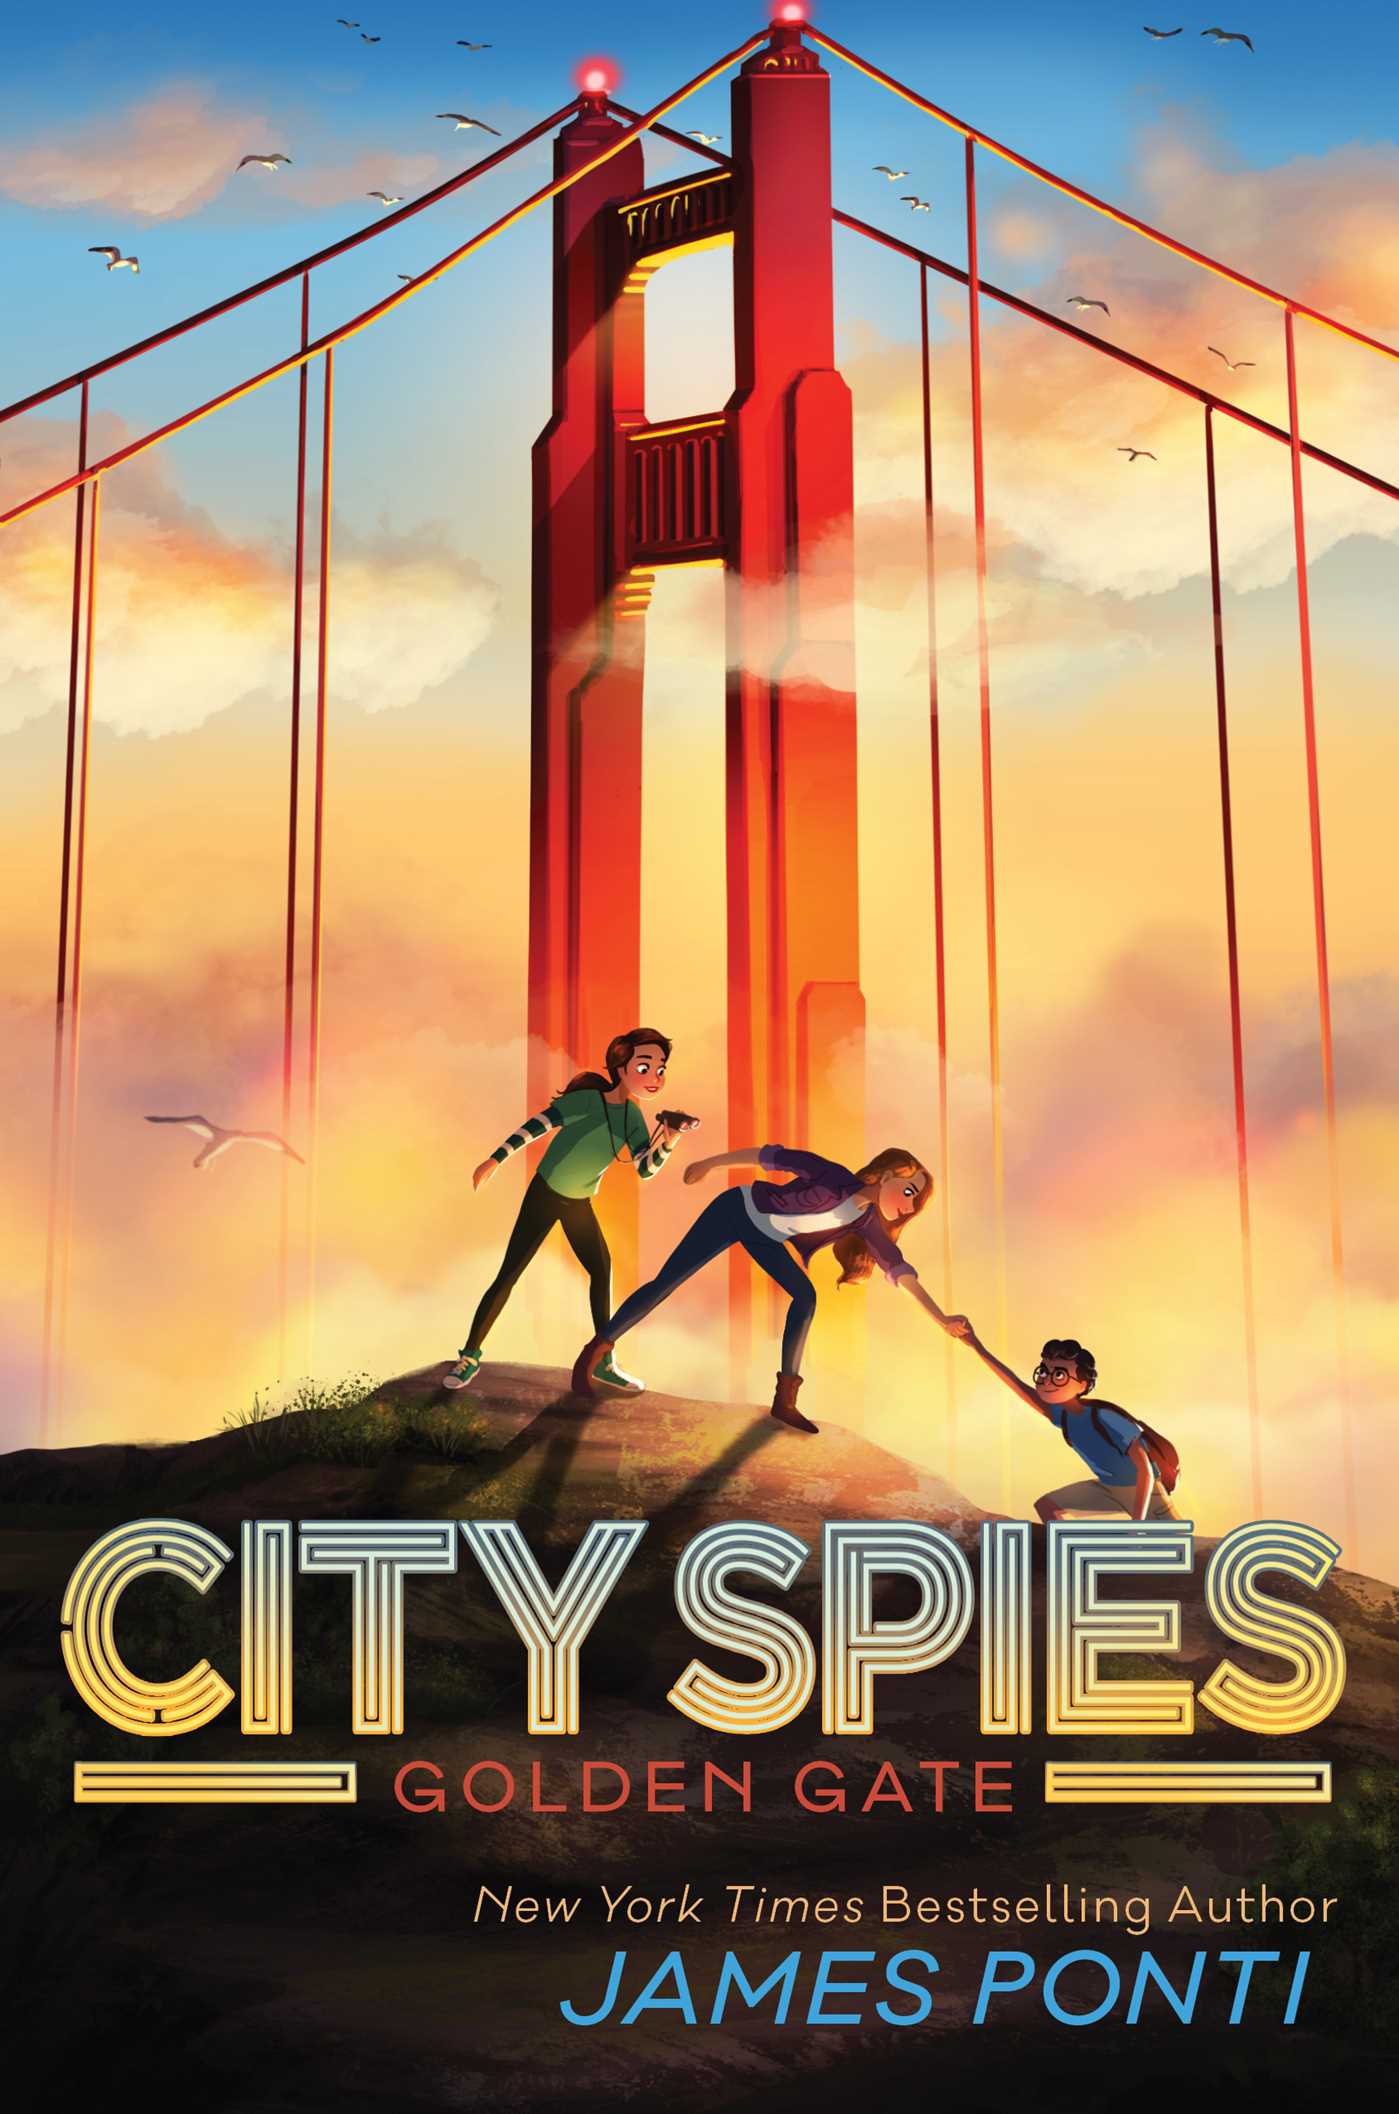 Golden Gate: City Spies series (Book 2)